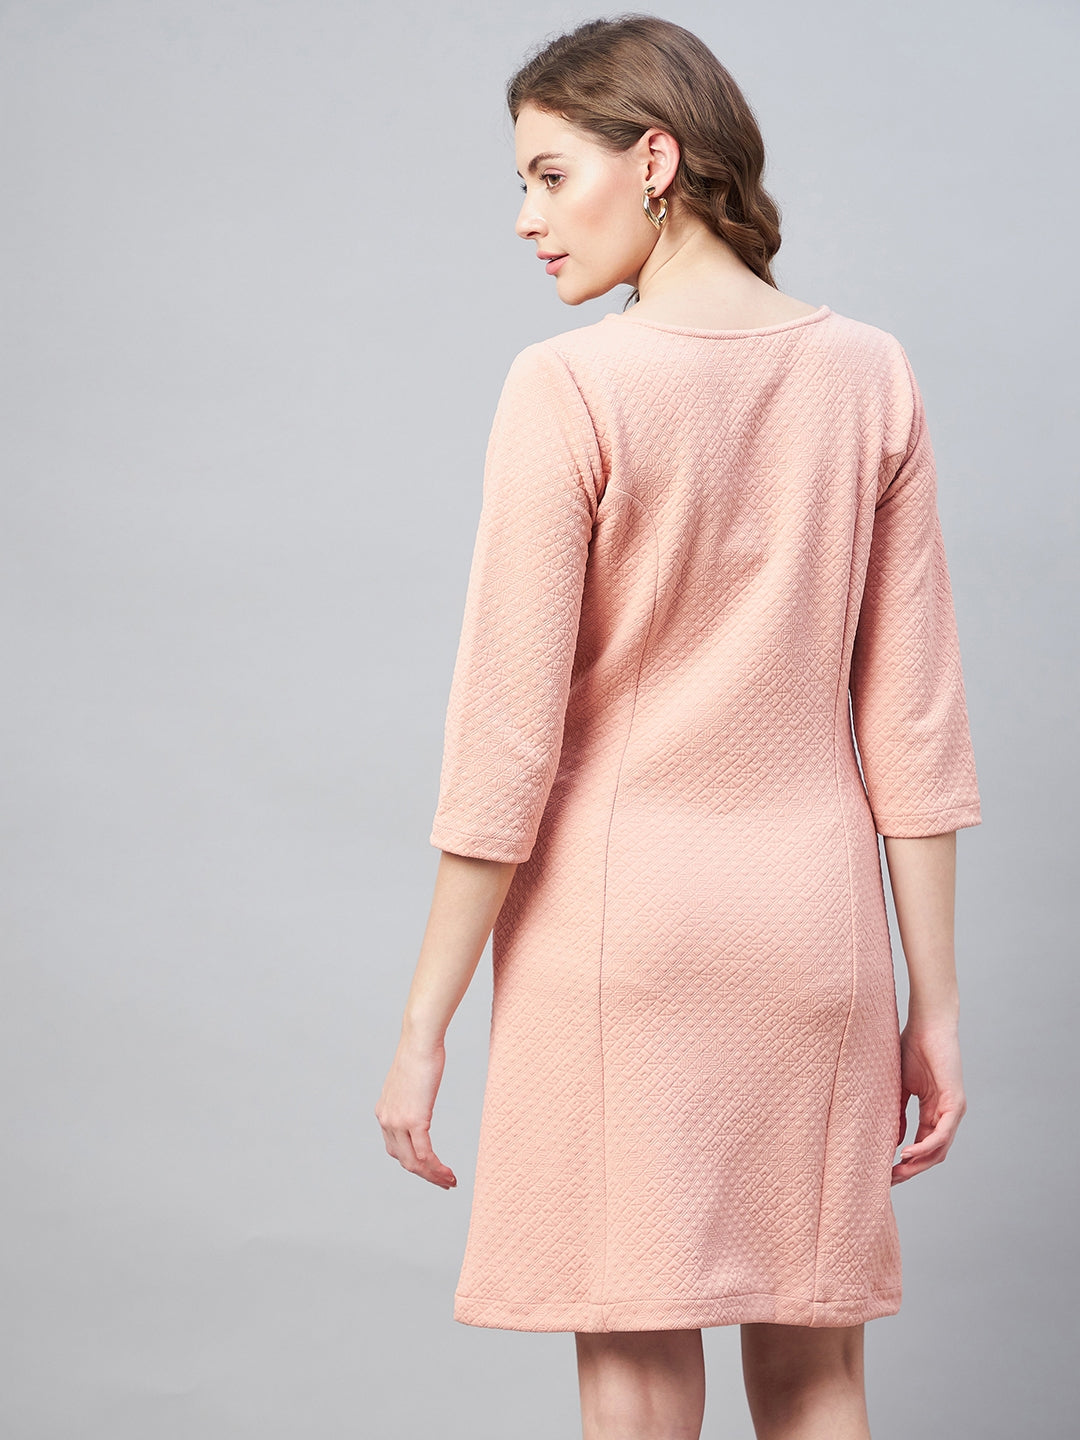 StyleStone Women's Jacquard Self Design Pink Dress